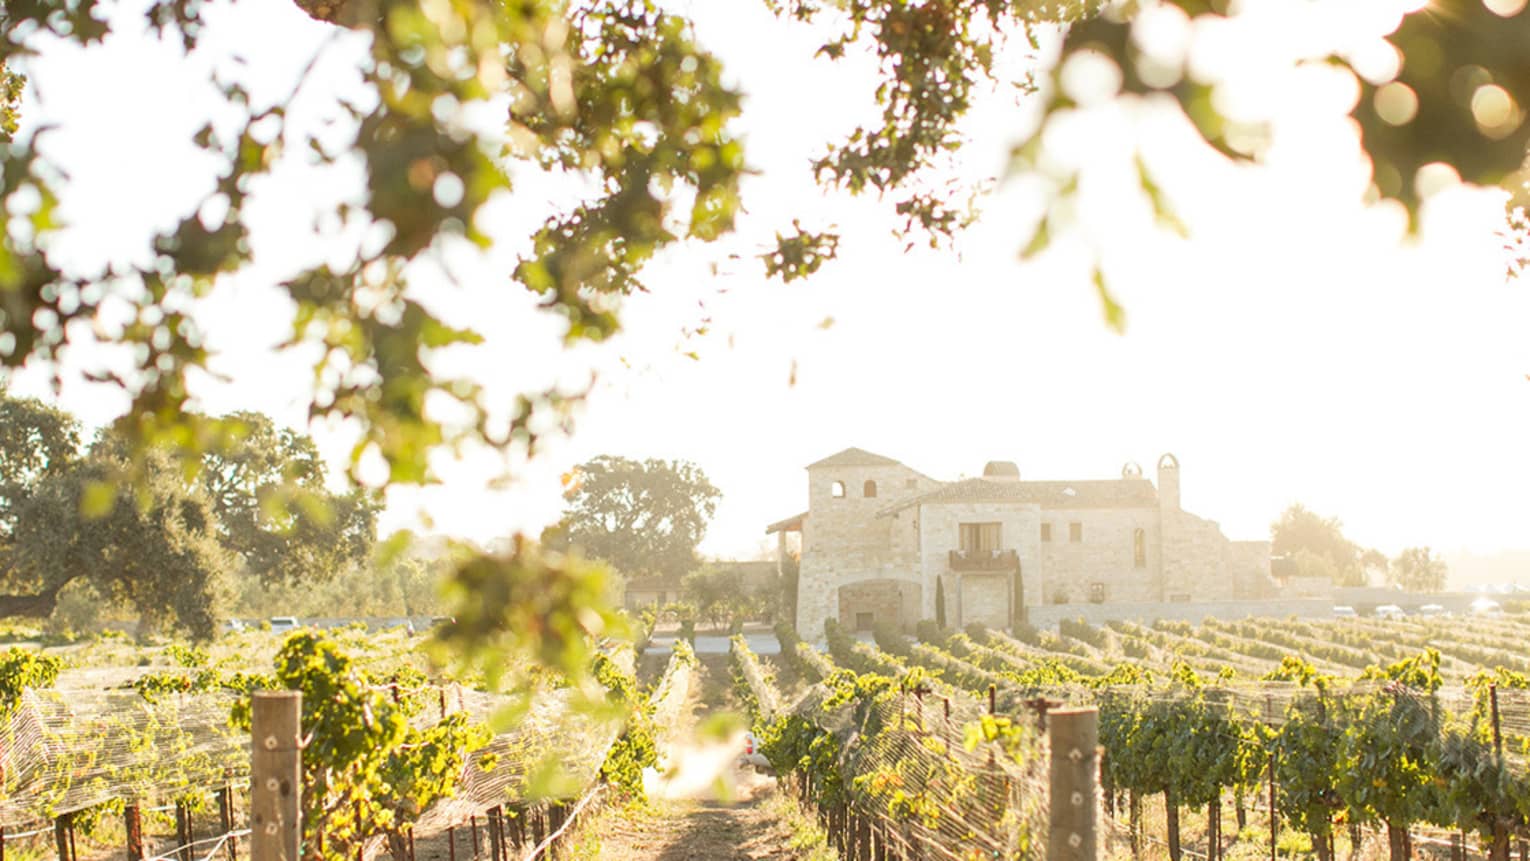 Sun glows over rows of vines in California vineyard, Sunstone Vineyards stone house